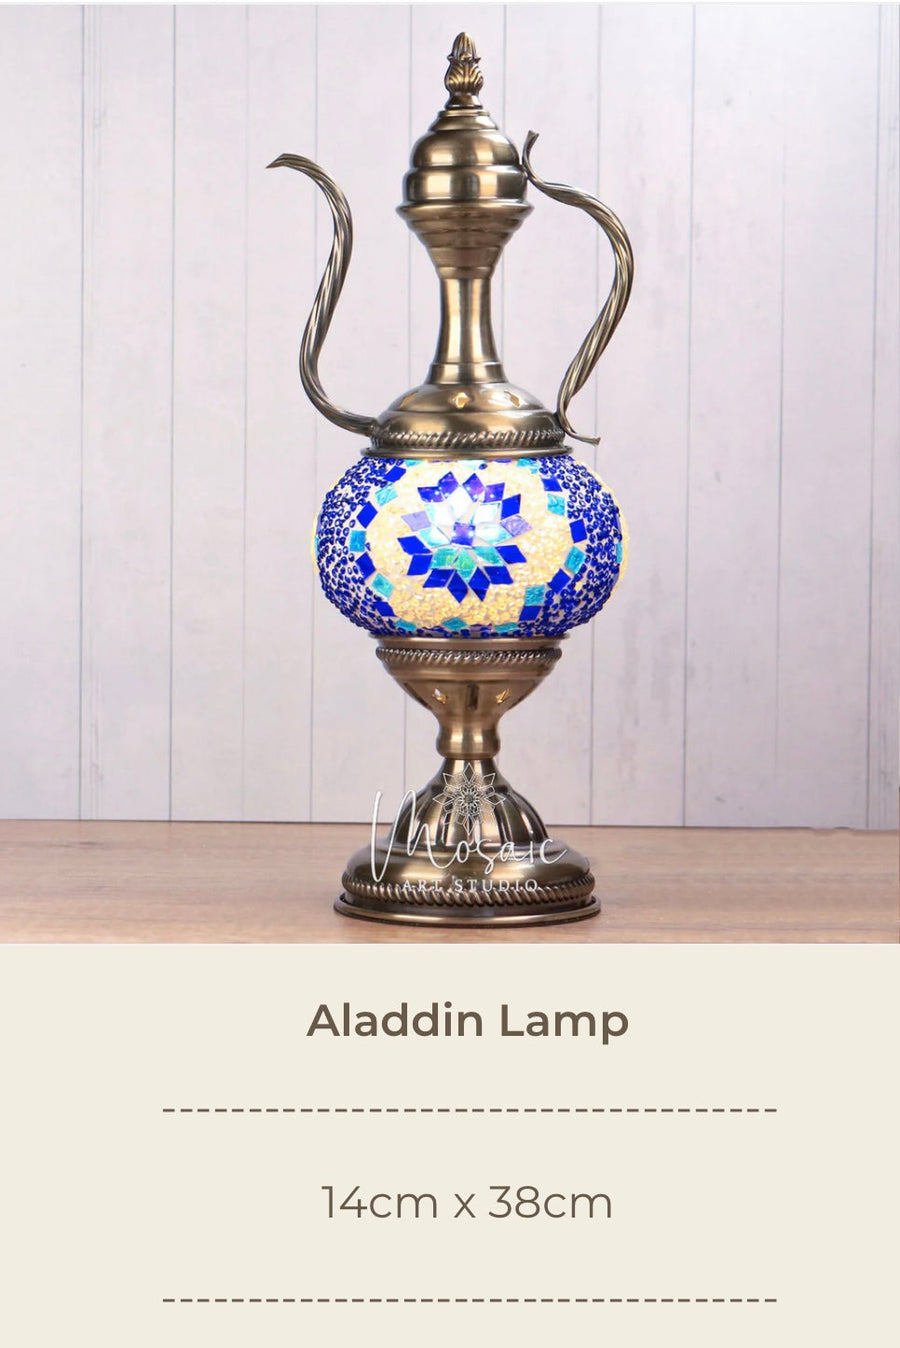 Calgary Turkish Mosaic Lamp DIY Workshop - Mosaic Art Studio Vancouver Aladdin Lamp